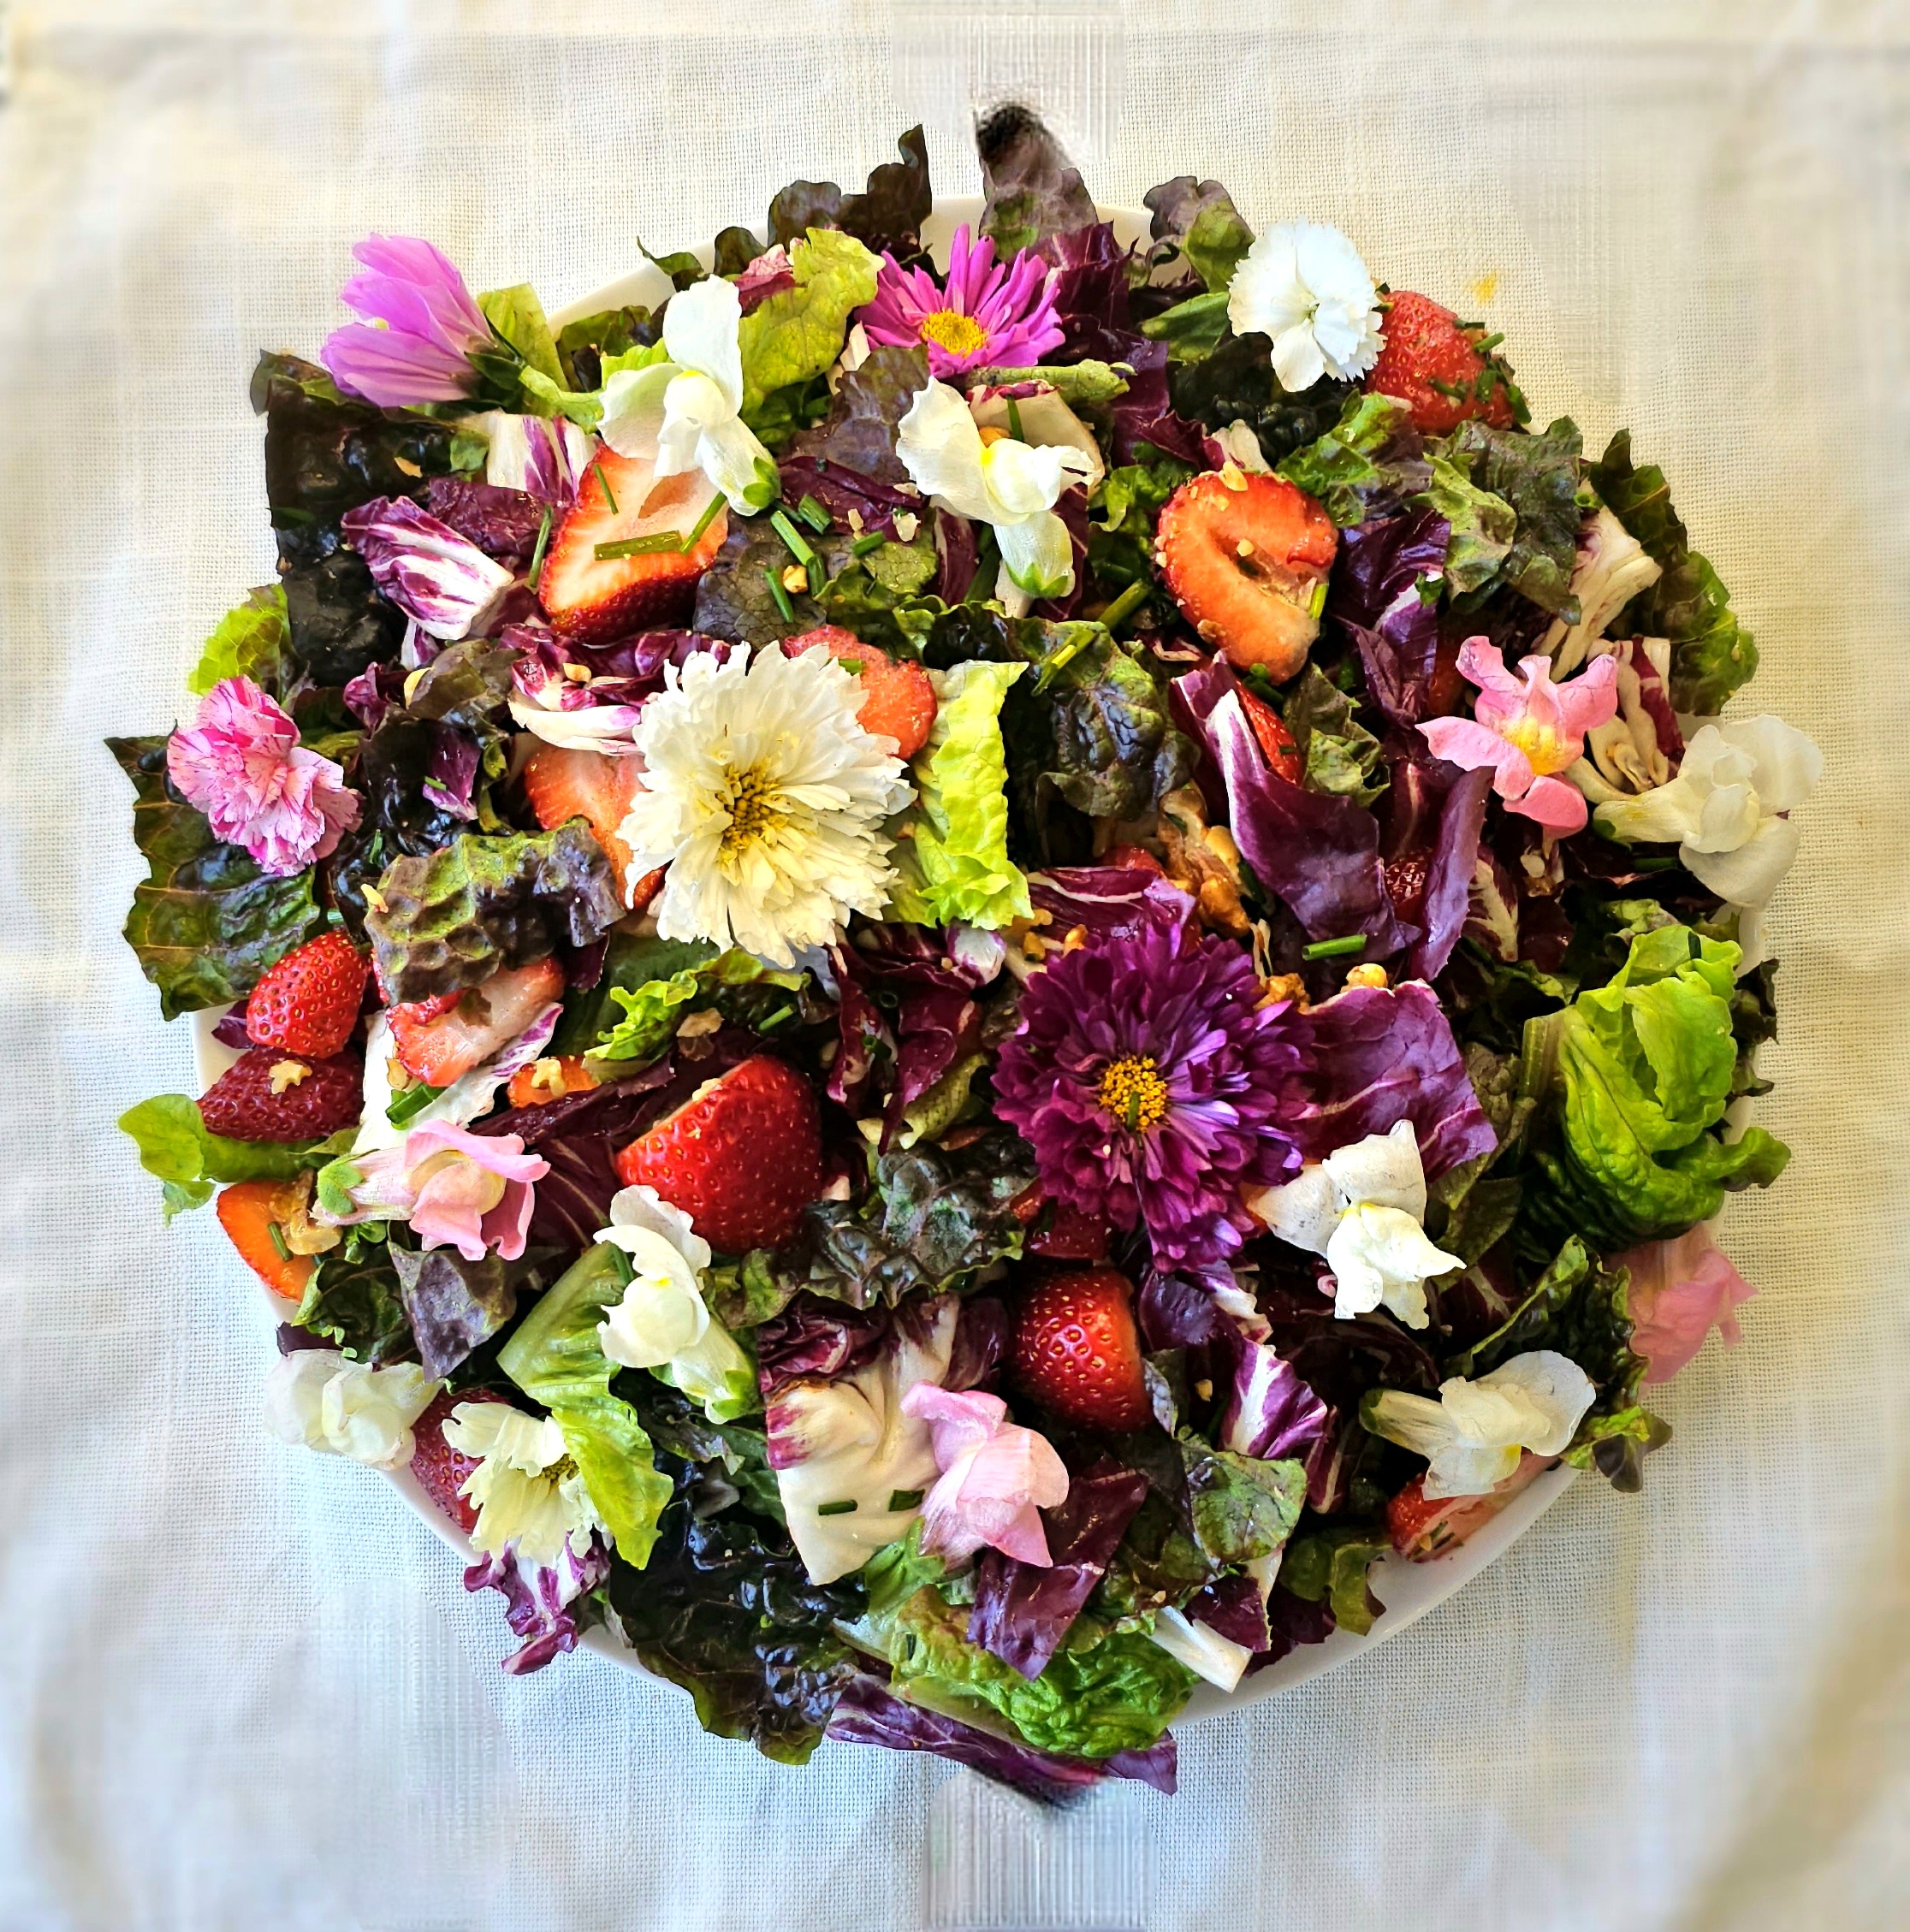 Garden Salad with Strawberries & Edible Flowers